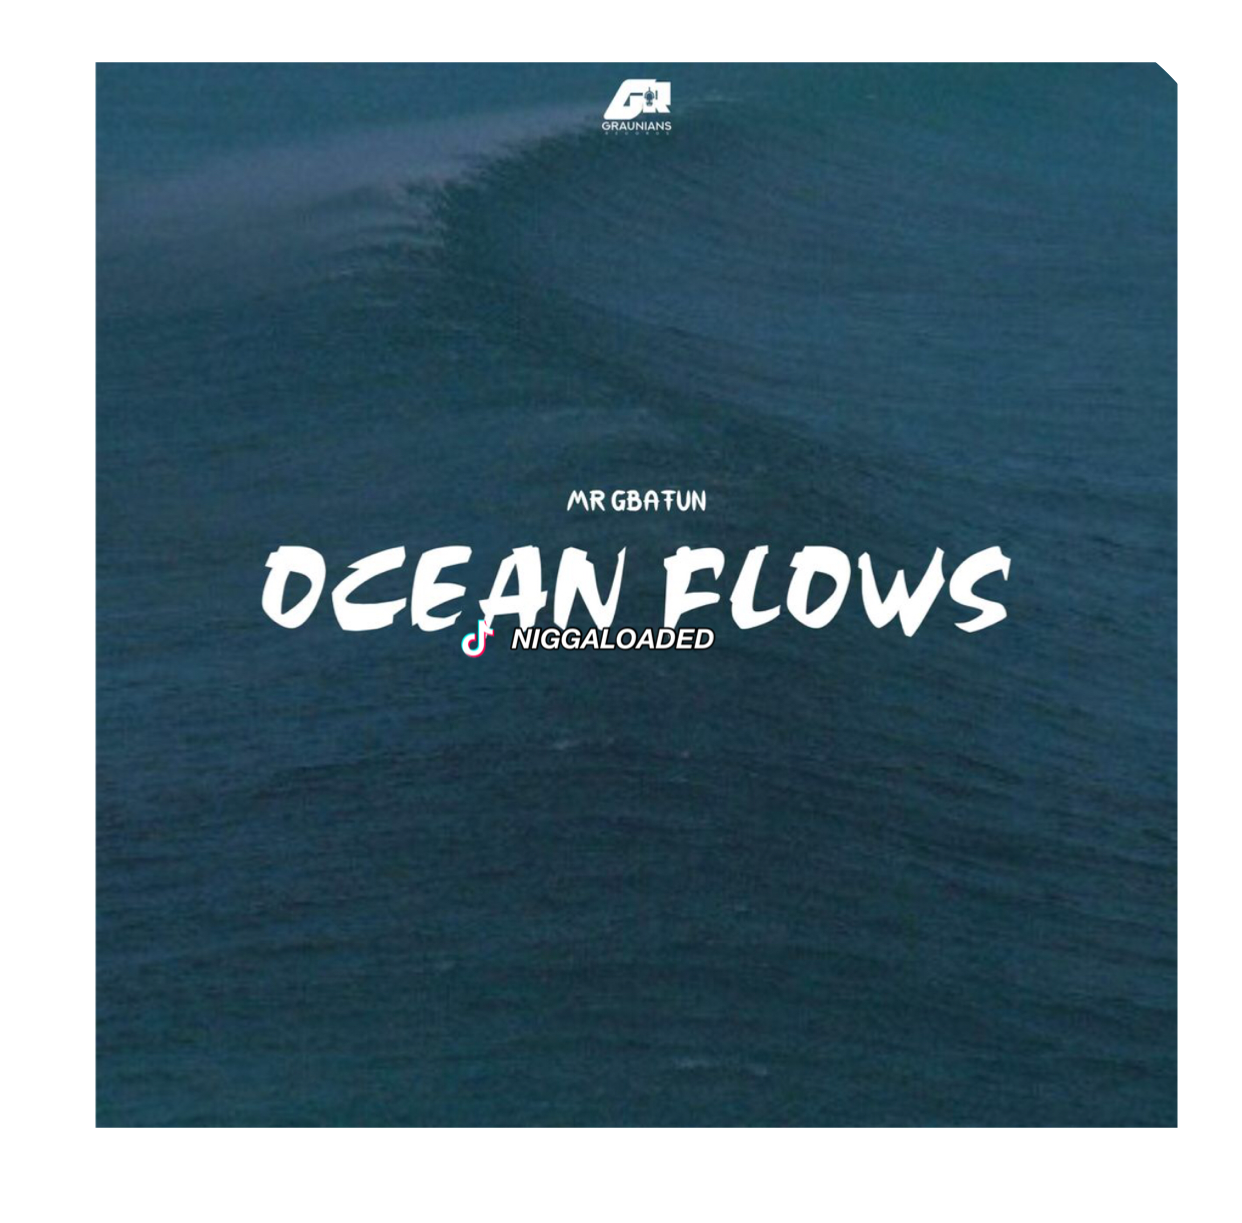 Mr Gbafun - Ocean Flows